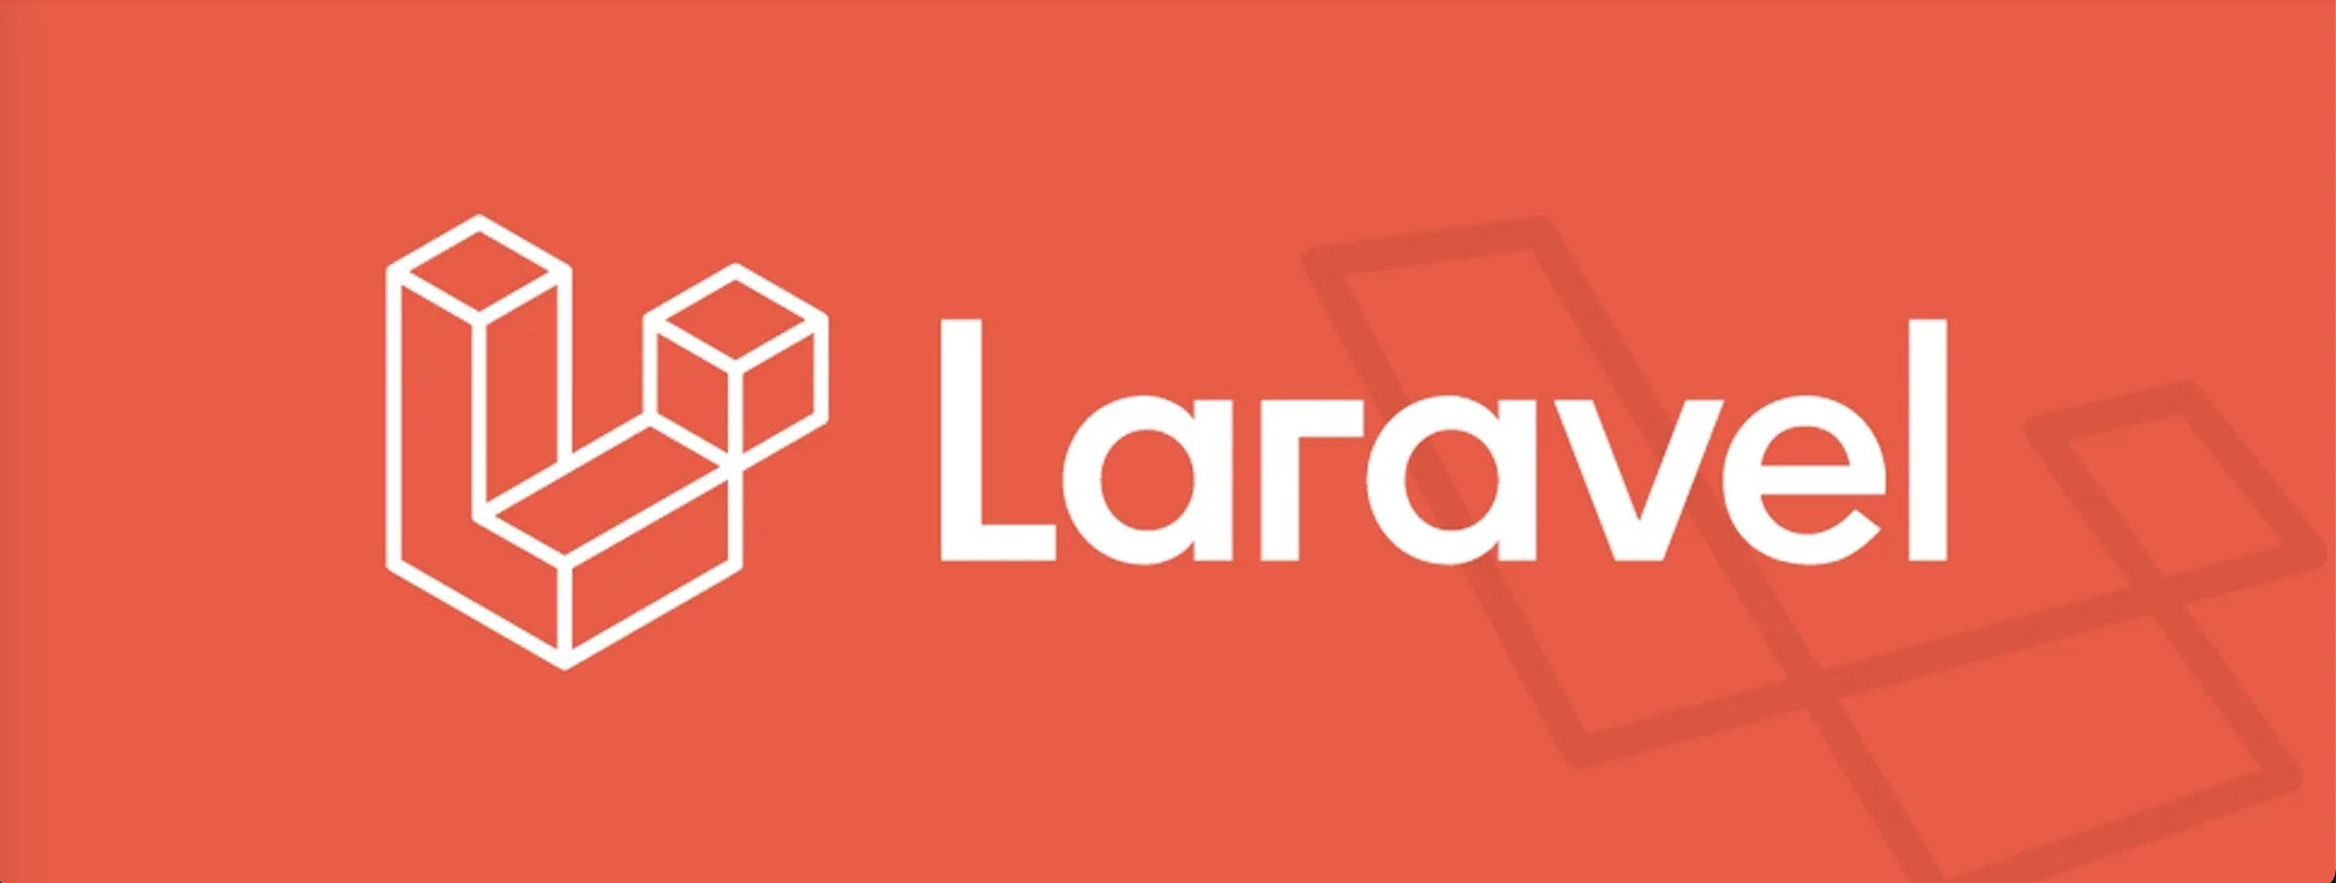 Php Laravel Installation And Basics Developersio